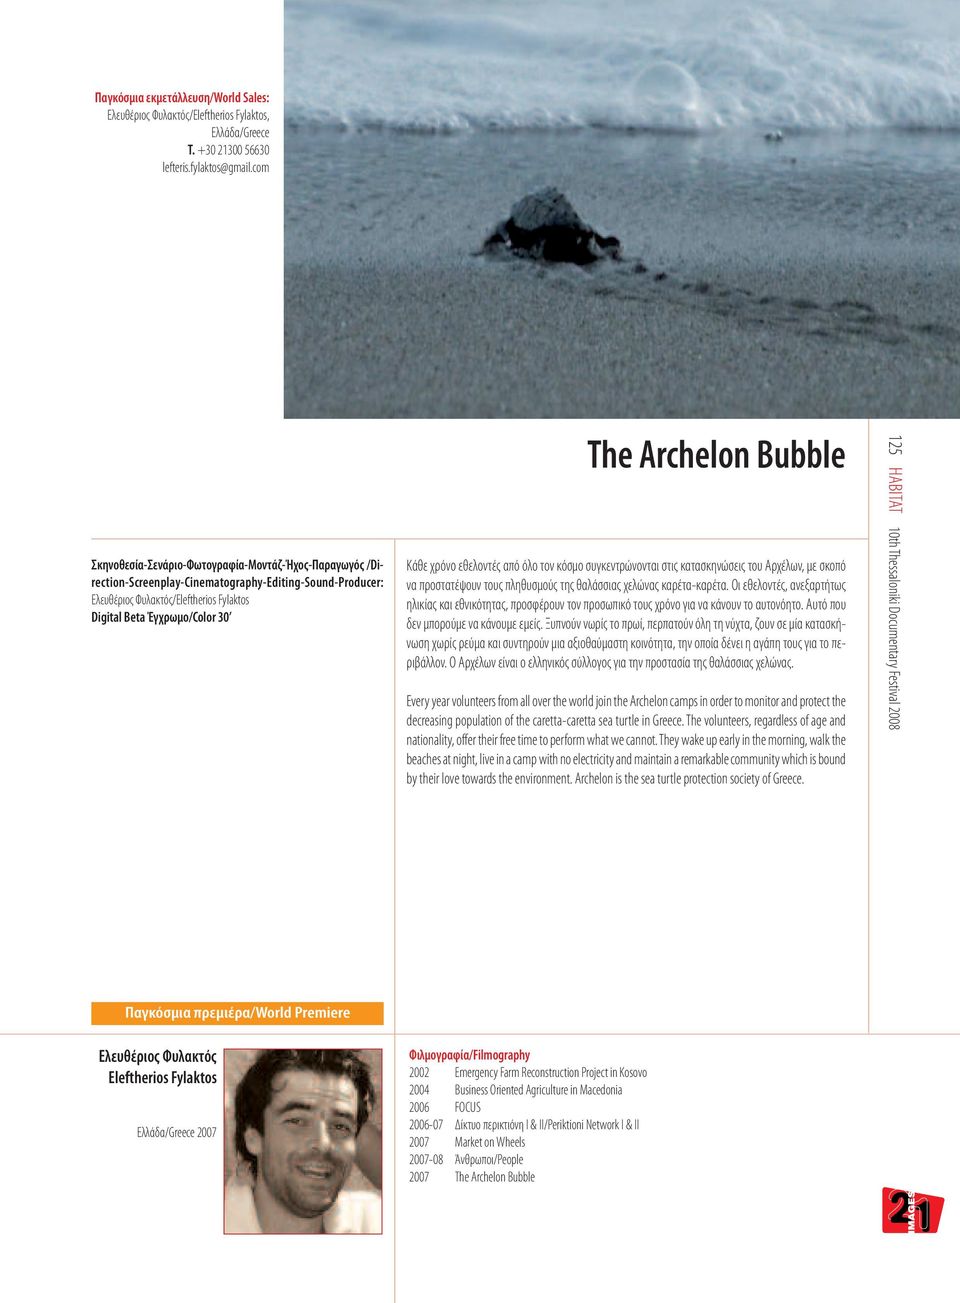 Archelon Βubble Κάθε χρόνο εθελοντές από όλο τον κόσμο συγκεντρώνονται στις κατασκηνώσεις του Αρχέλων, με σκοπό να προστατέψουν τους πληθυσμούς της θαλάσσιας χελώνας καρέτα-καρέτα.